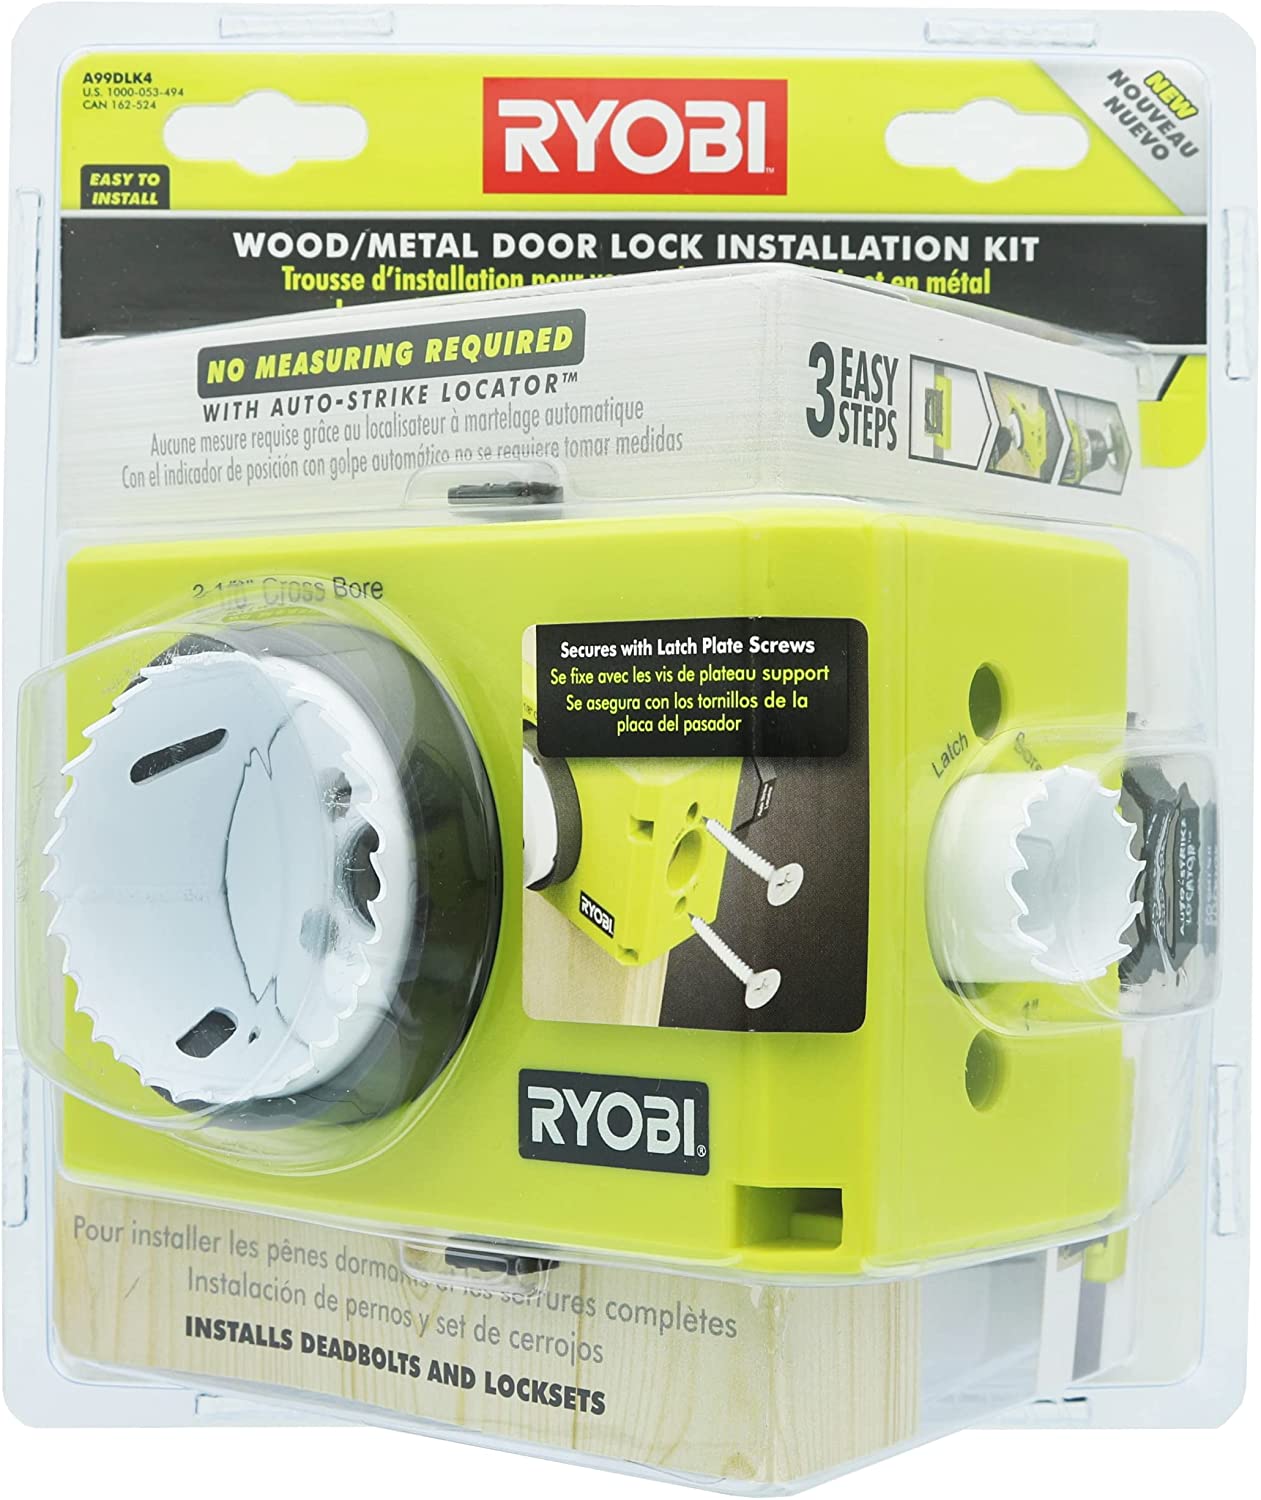 Ryobi A99HT2 Door Hinge Installation Kit/Mortiser Template Bundled with Ryobi A99DLK4